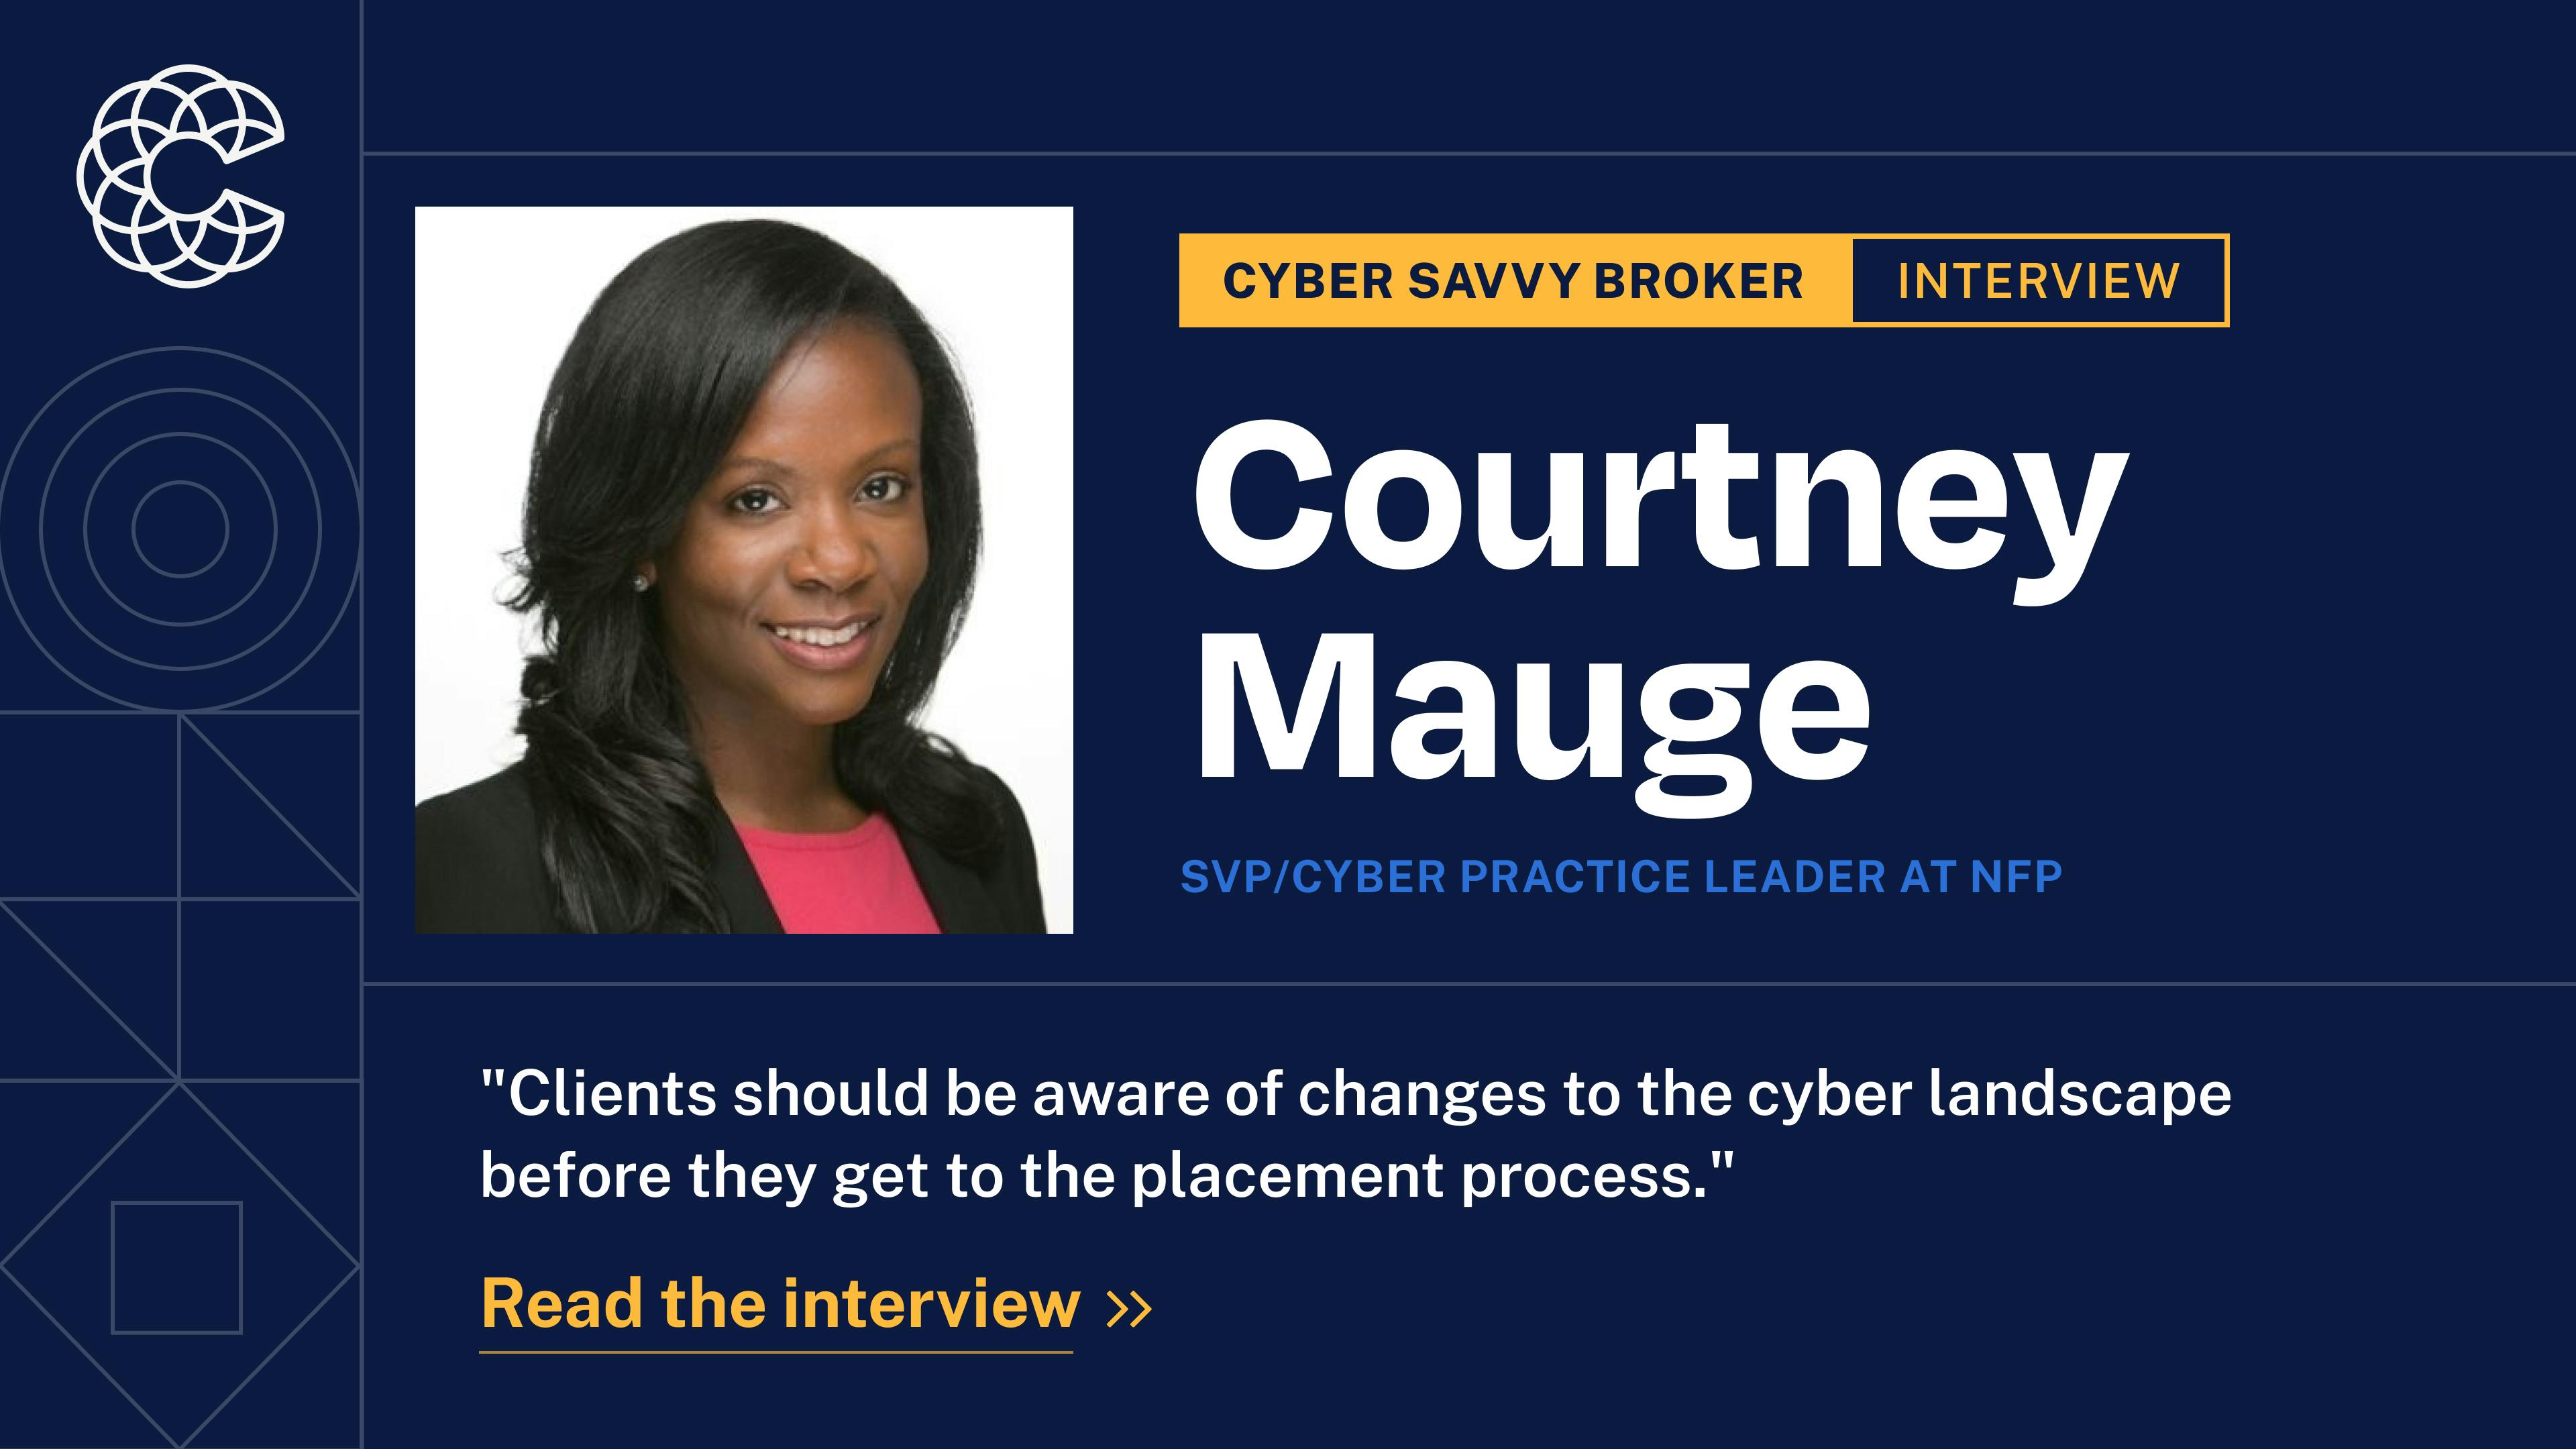 Blog: Cyber Savvy Broker Courtney Mauge